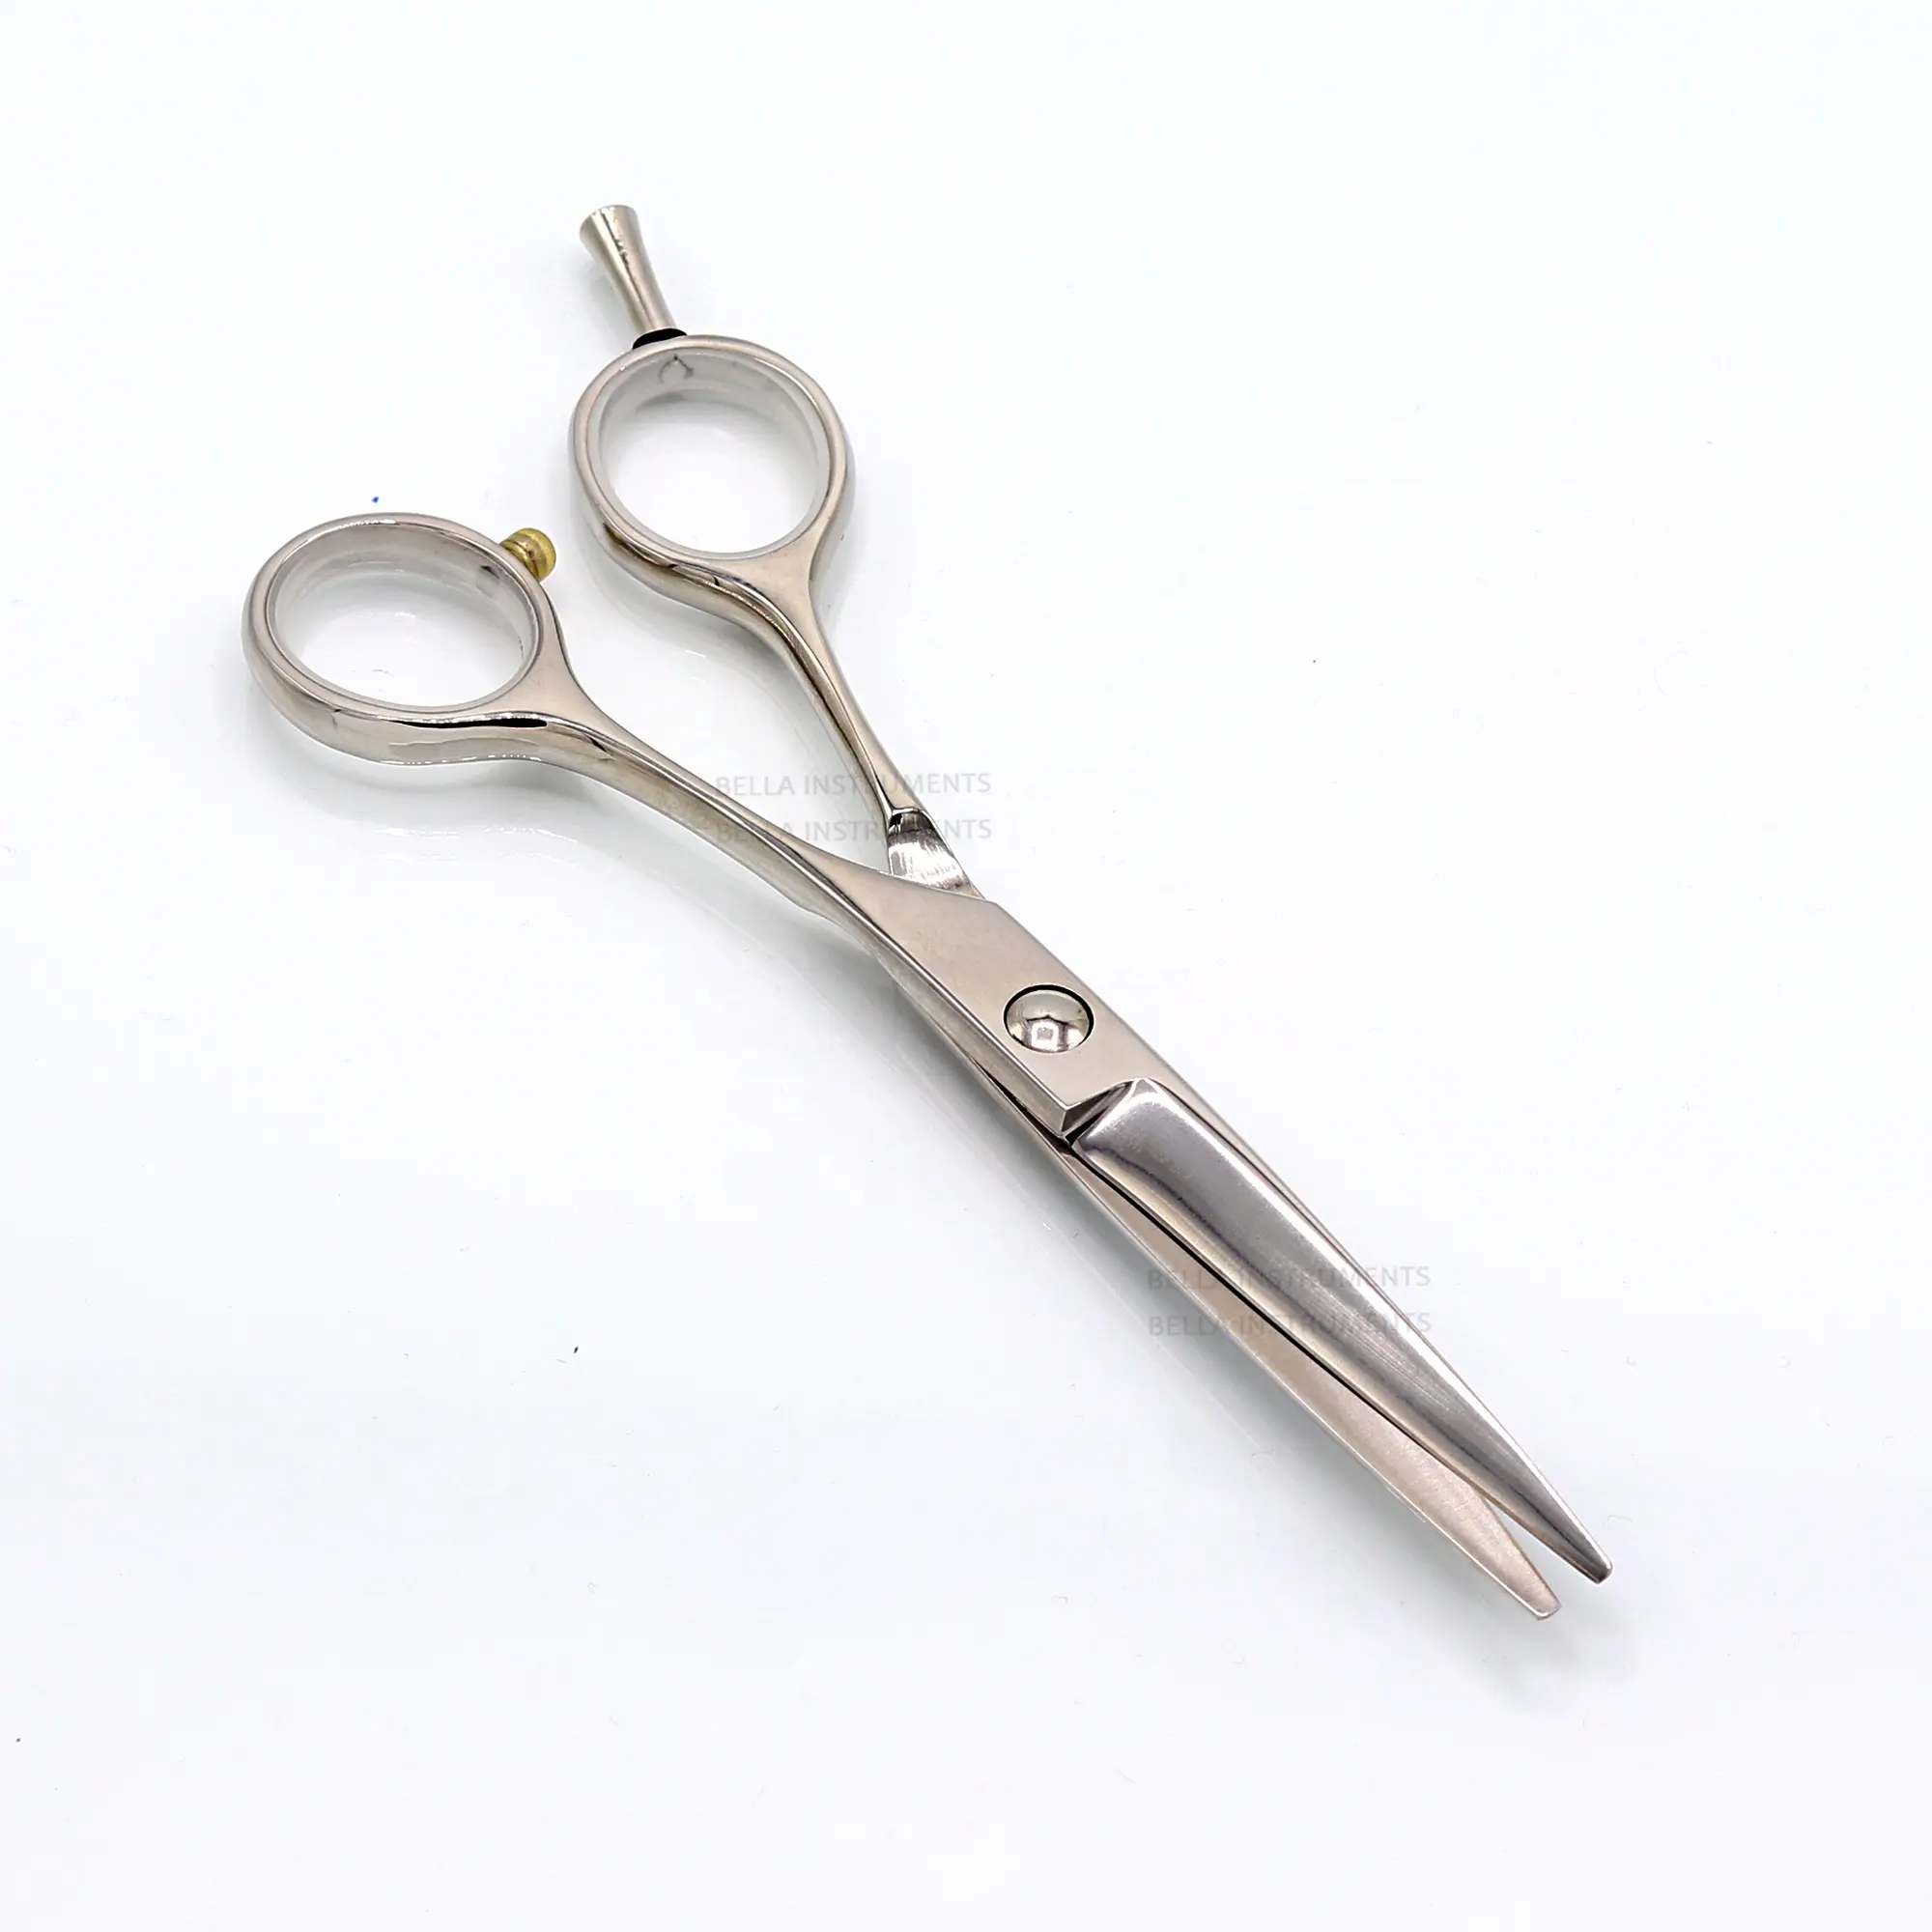 Professional Hair Cutting scissors Razor Edged High Quality J2 410c Steel German Quality Standard Barber Scissors